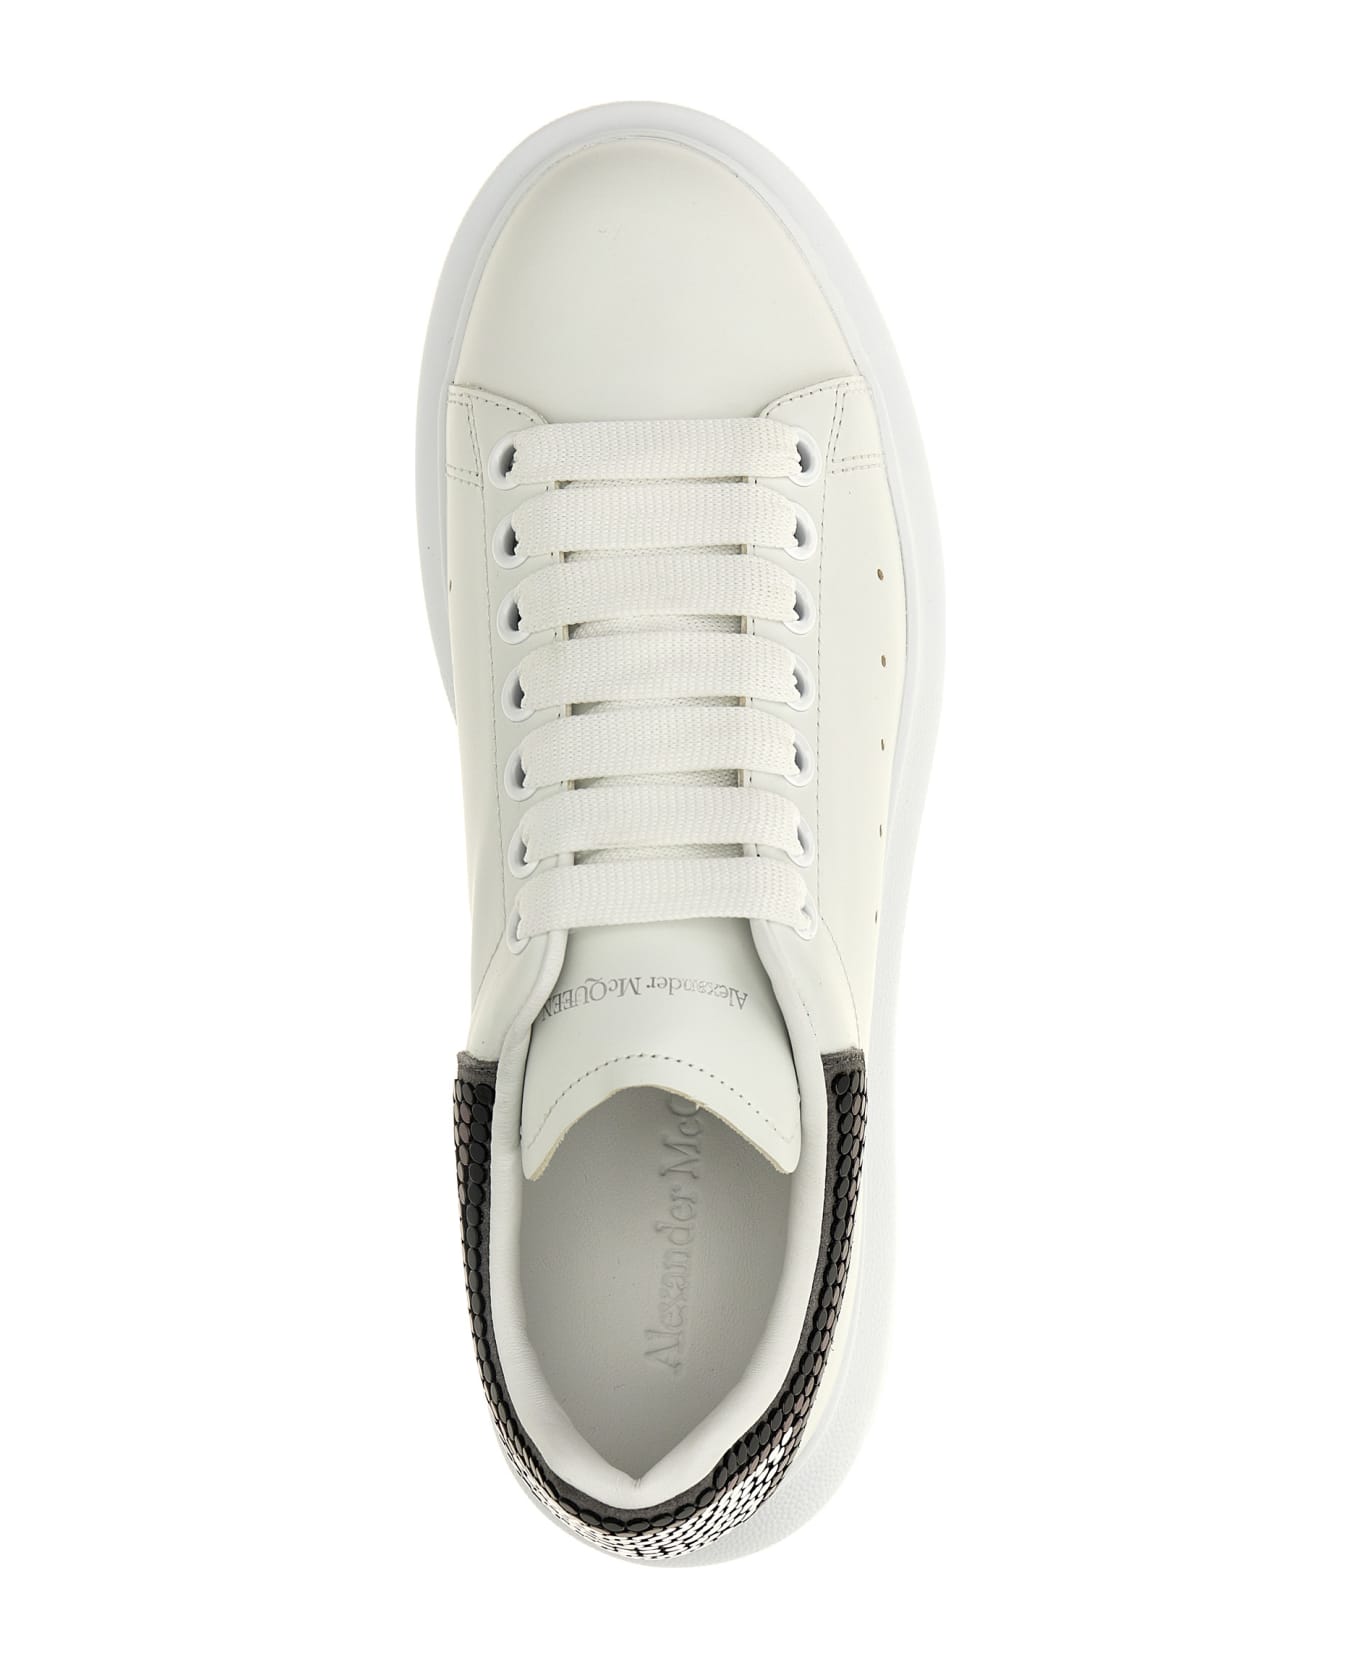 Alexander McQueen 'larry' Sneakers - White/Black スニーカー